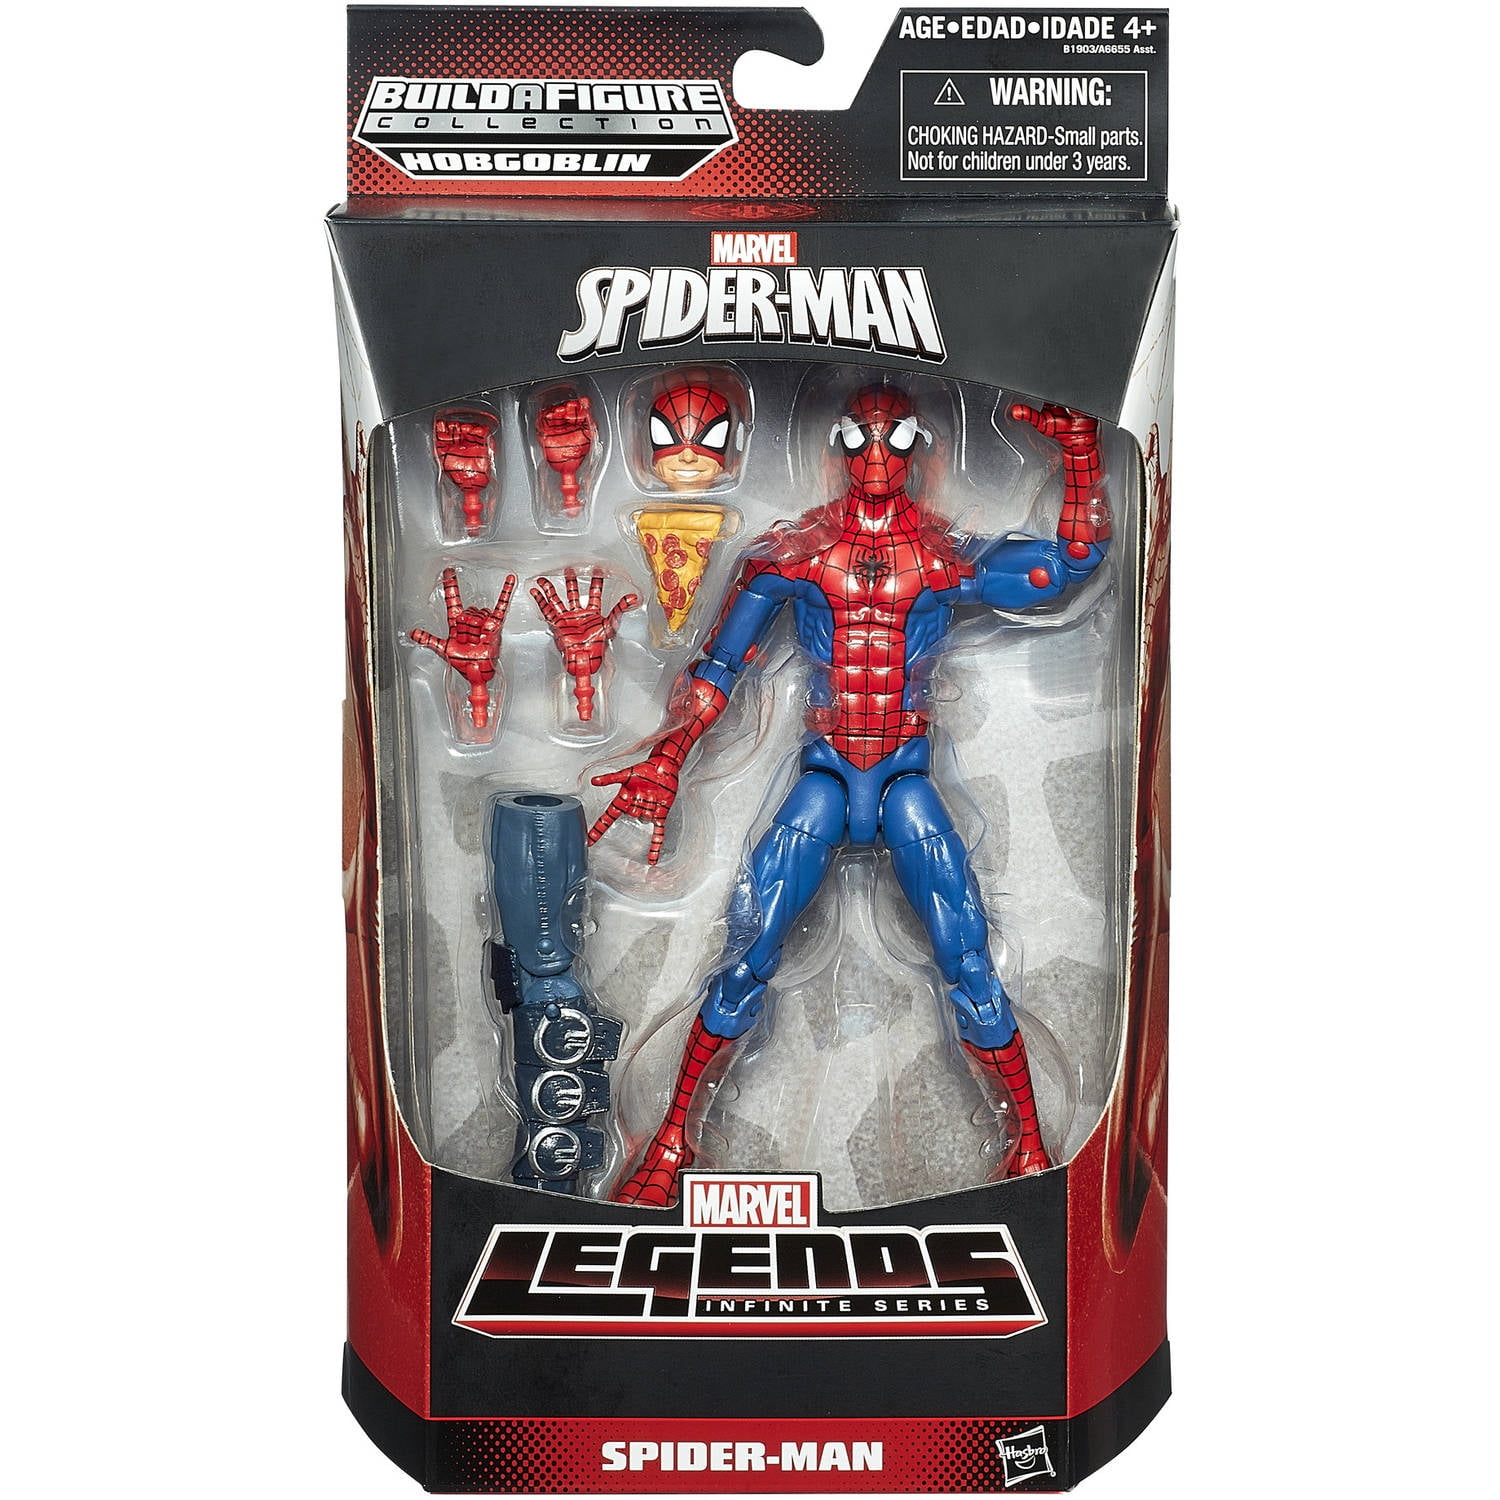 Marvel Legends Infinite Series Spider-Man Figure 